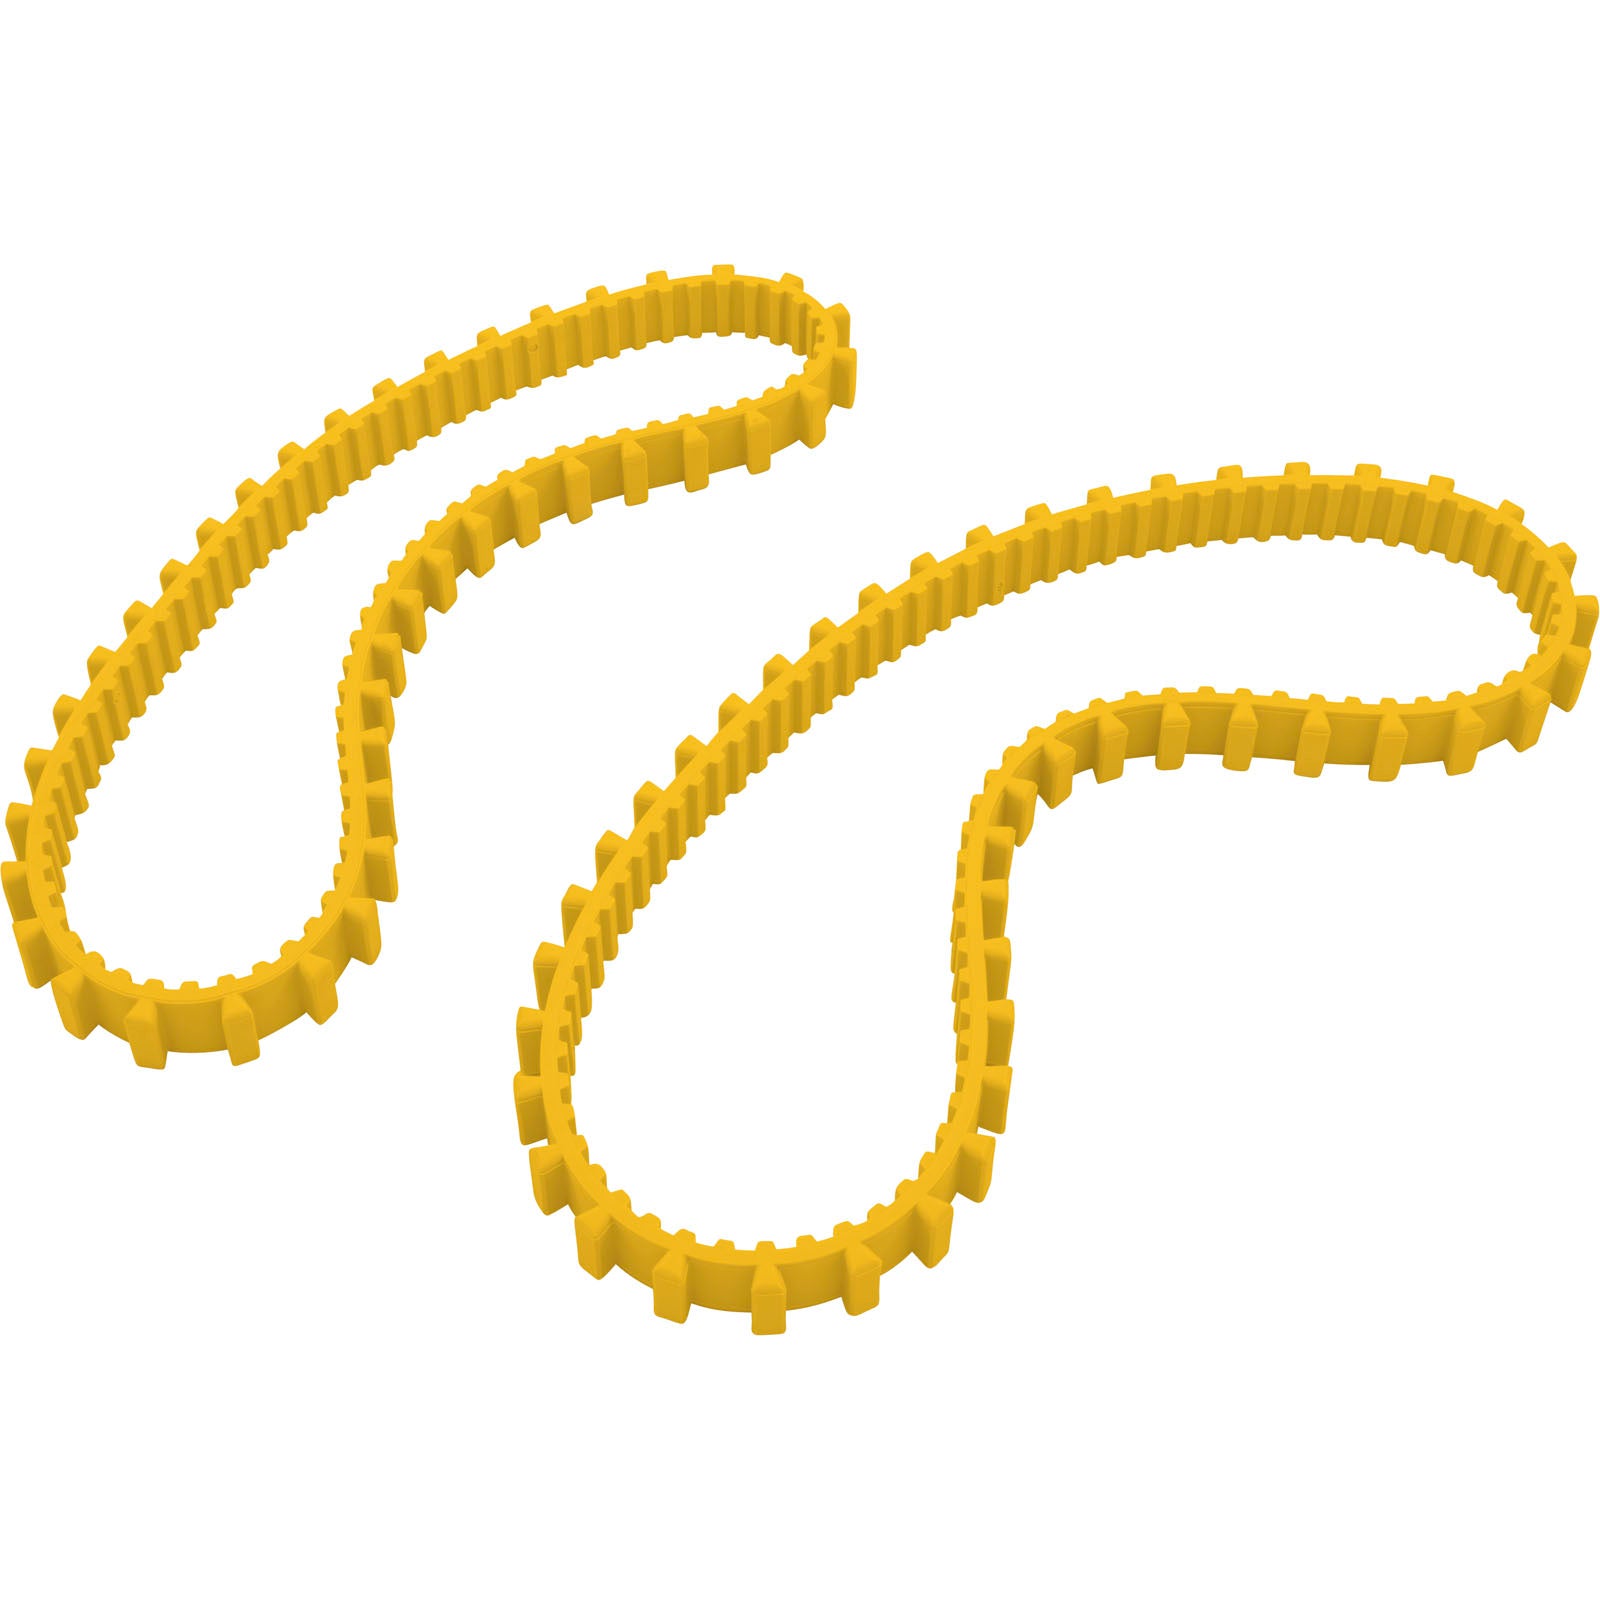 Long and Short, Yellow Track, Maytronics 9985016-R2